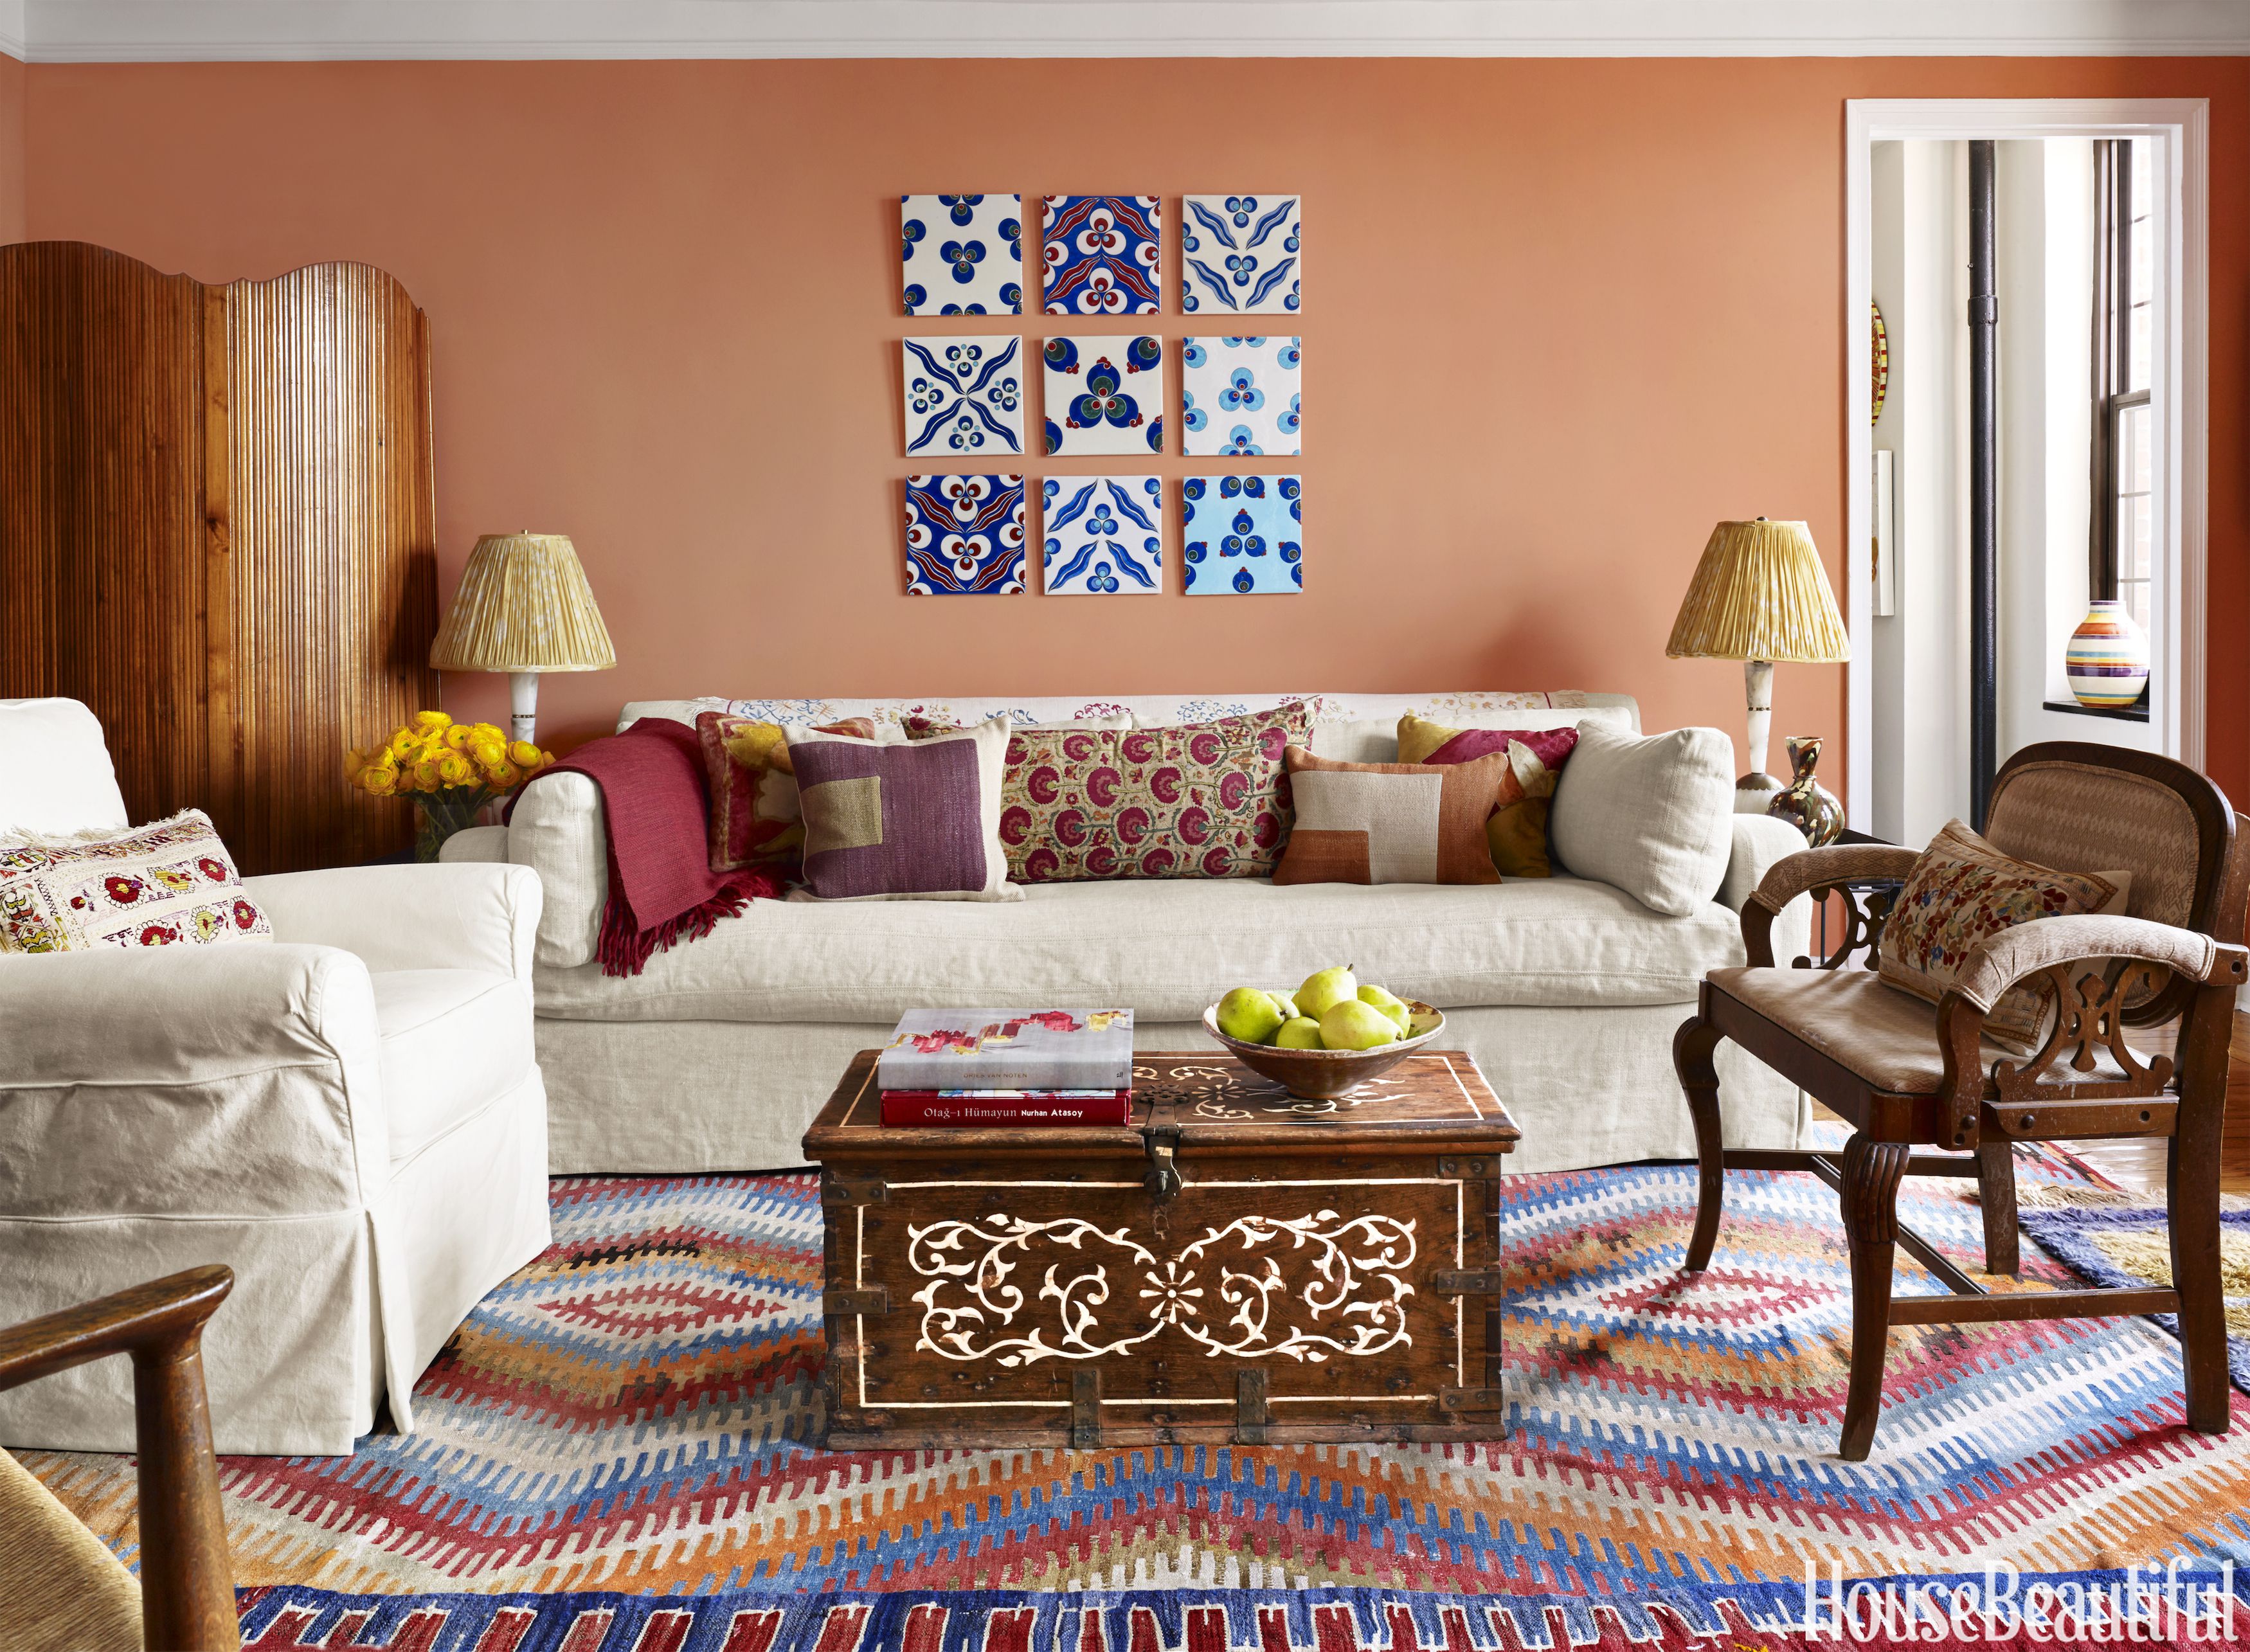 20 Bohemian Decor Ideas - Boho Room Style Decorating and Inspiration